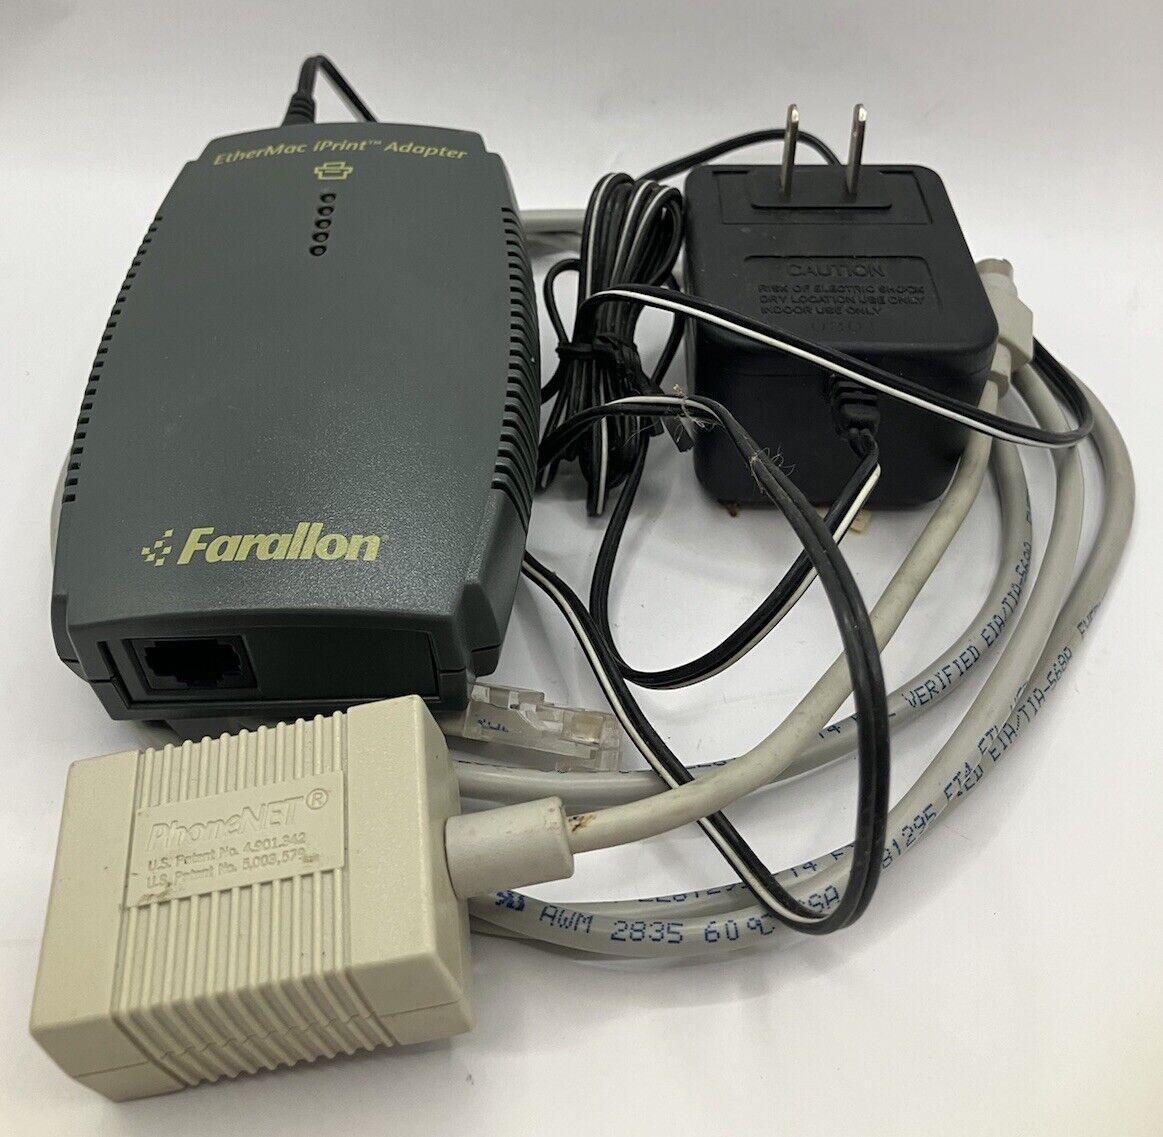 Farallon EtherMac iPrint Adapter and PhoneNet: Local Talk bridge Apple connector